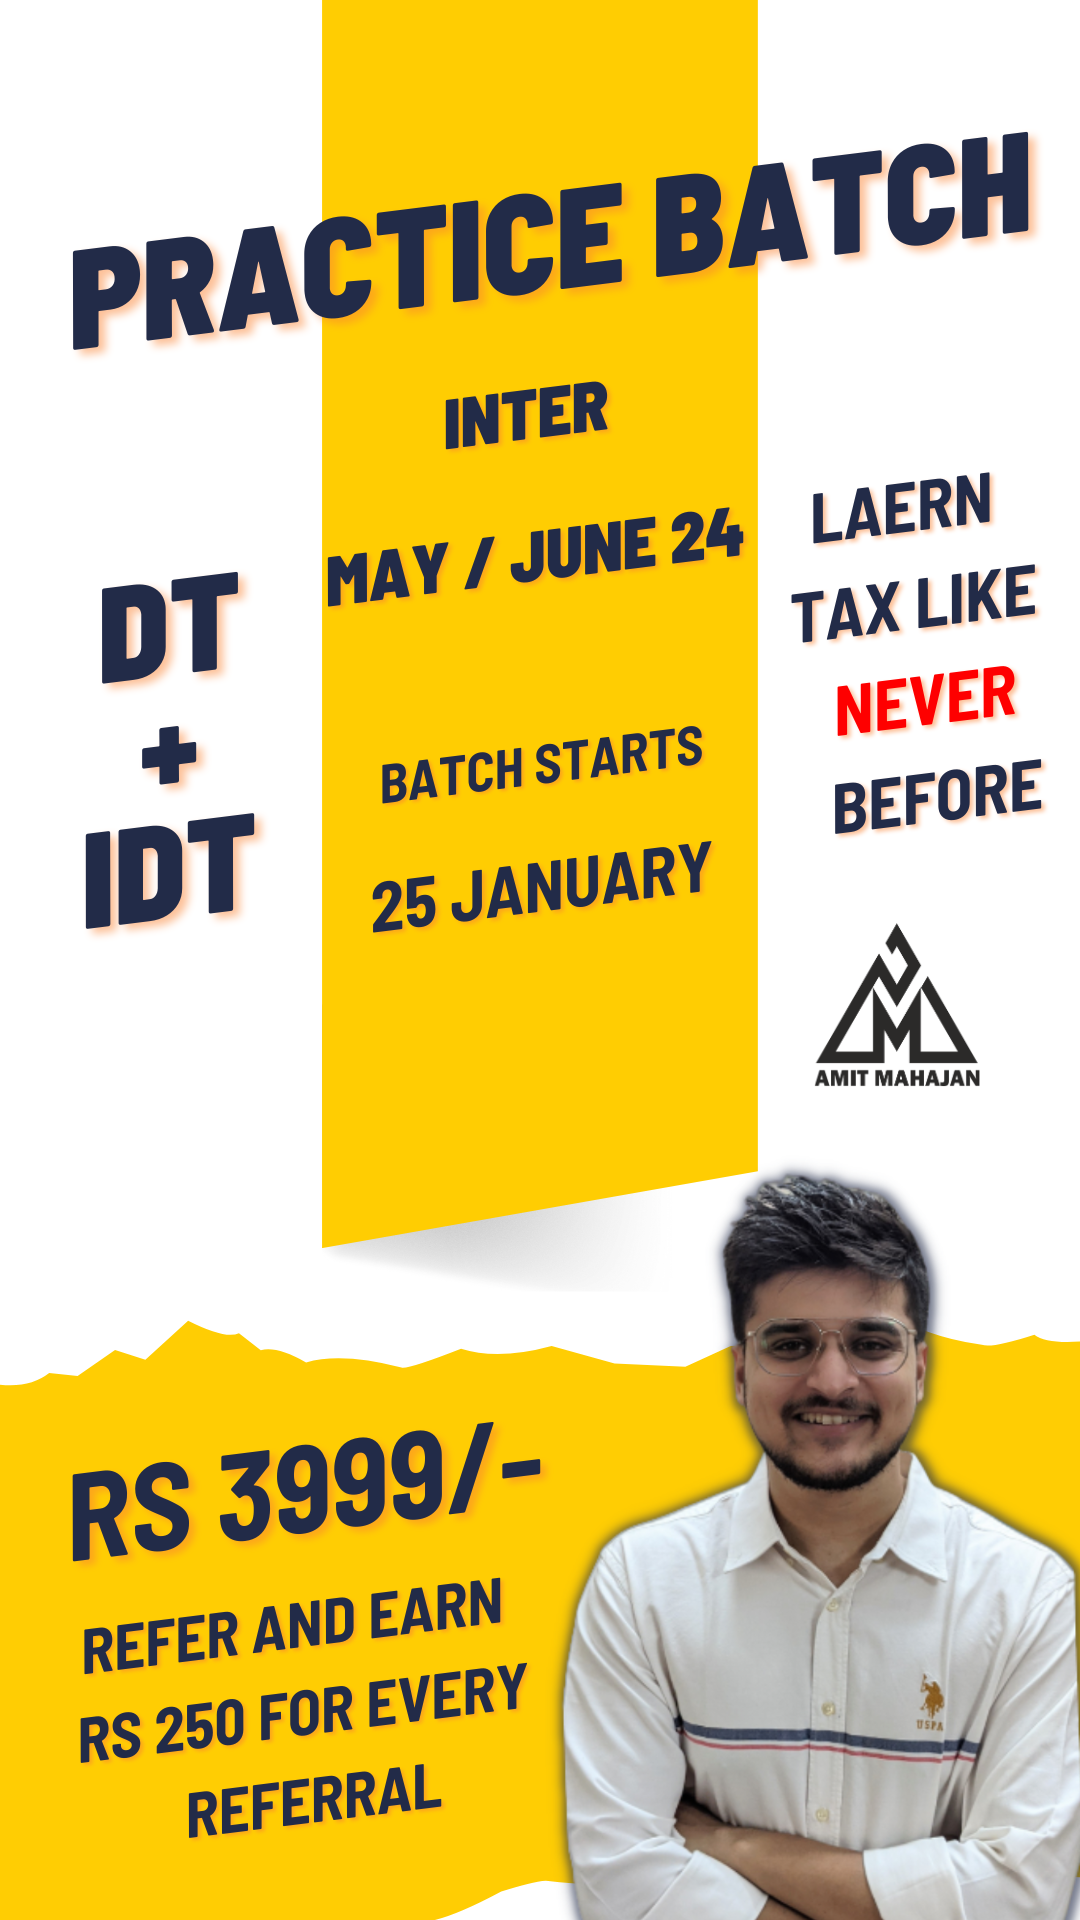 Tax Practice Batch - May / June 24 - (DT + IDT) - CA / CMA Inter | CA Amit Mahajan